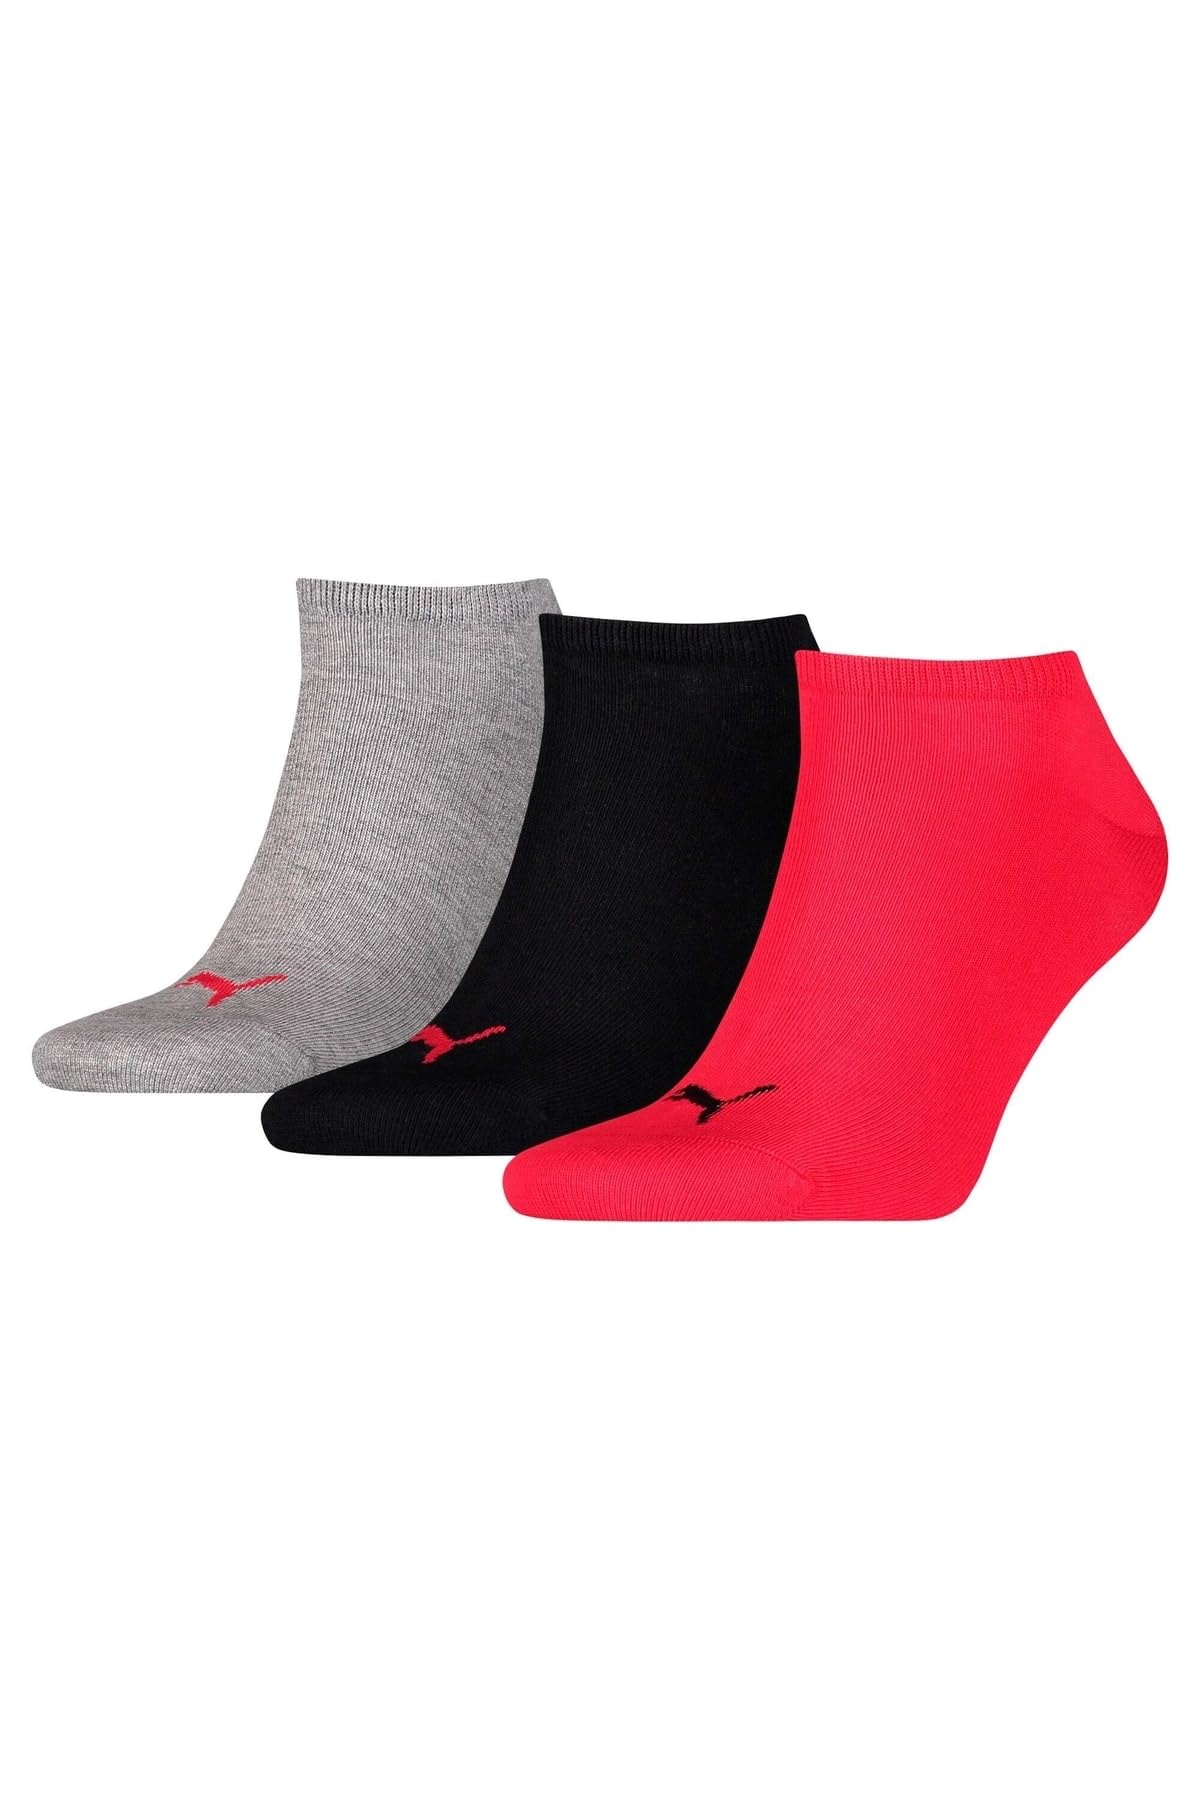 PUMA 9 Paar Sneaker Invisible Socken Gr. 35-49 Unisex für Damen Herren Füßlinge, Farbe:232 - black/red, Socken & Strümpfe:43-46